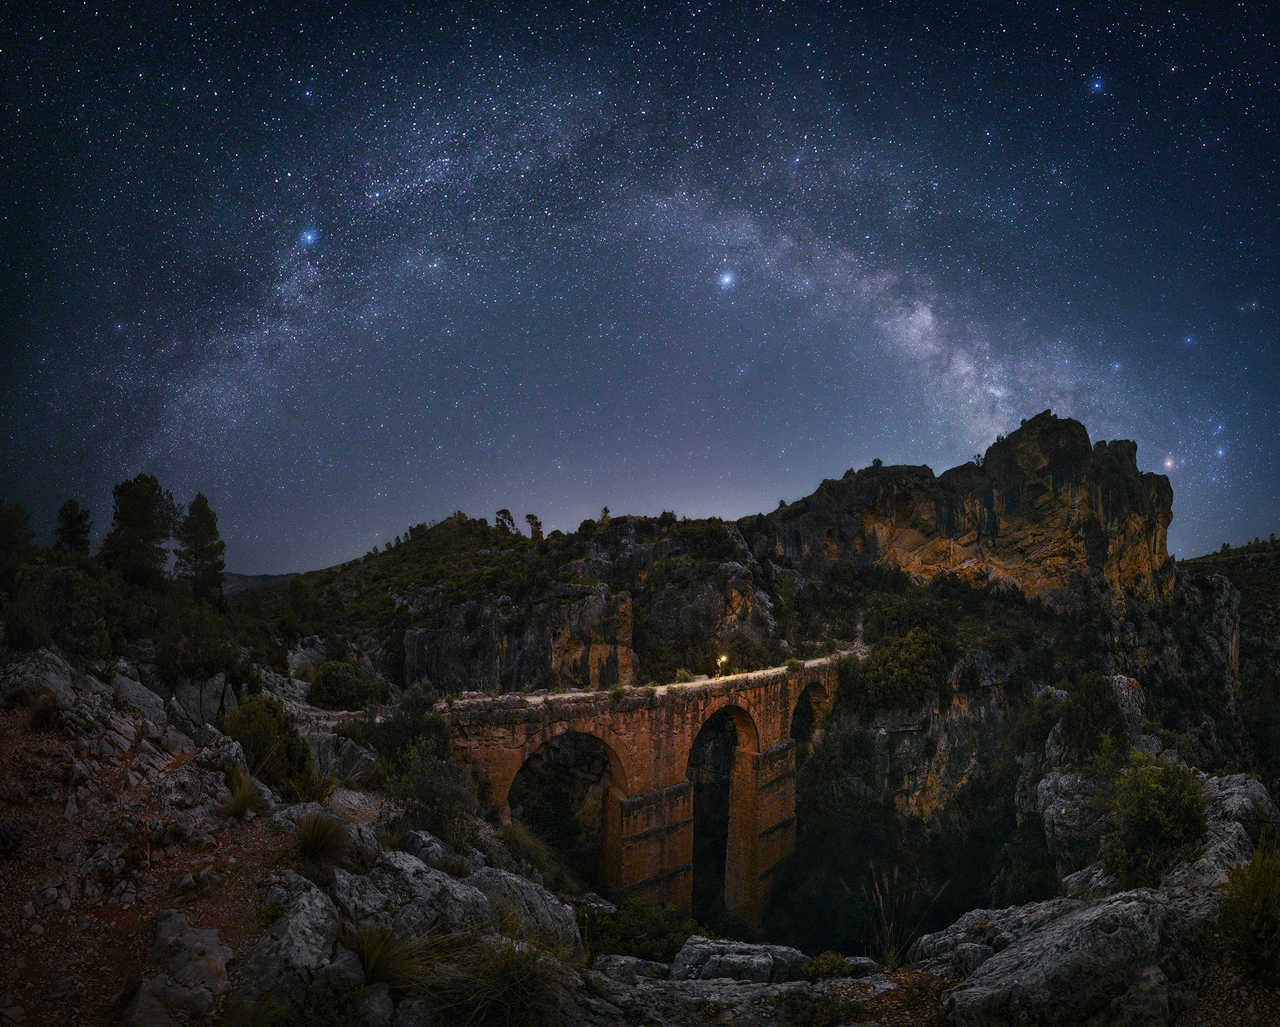 Milky Way over the Aqueduct of Peña Cortada